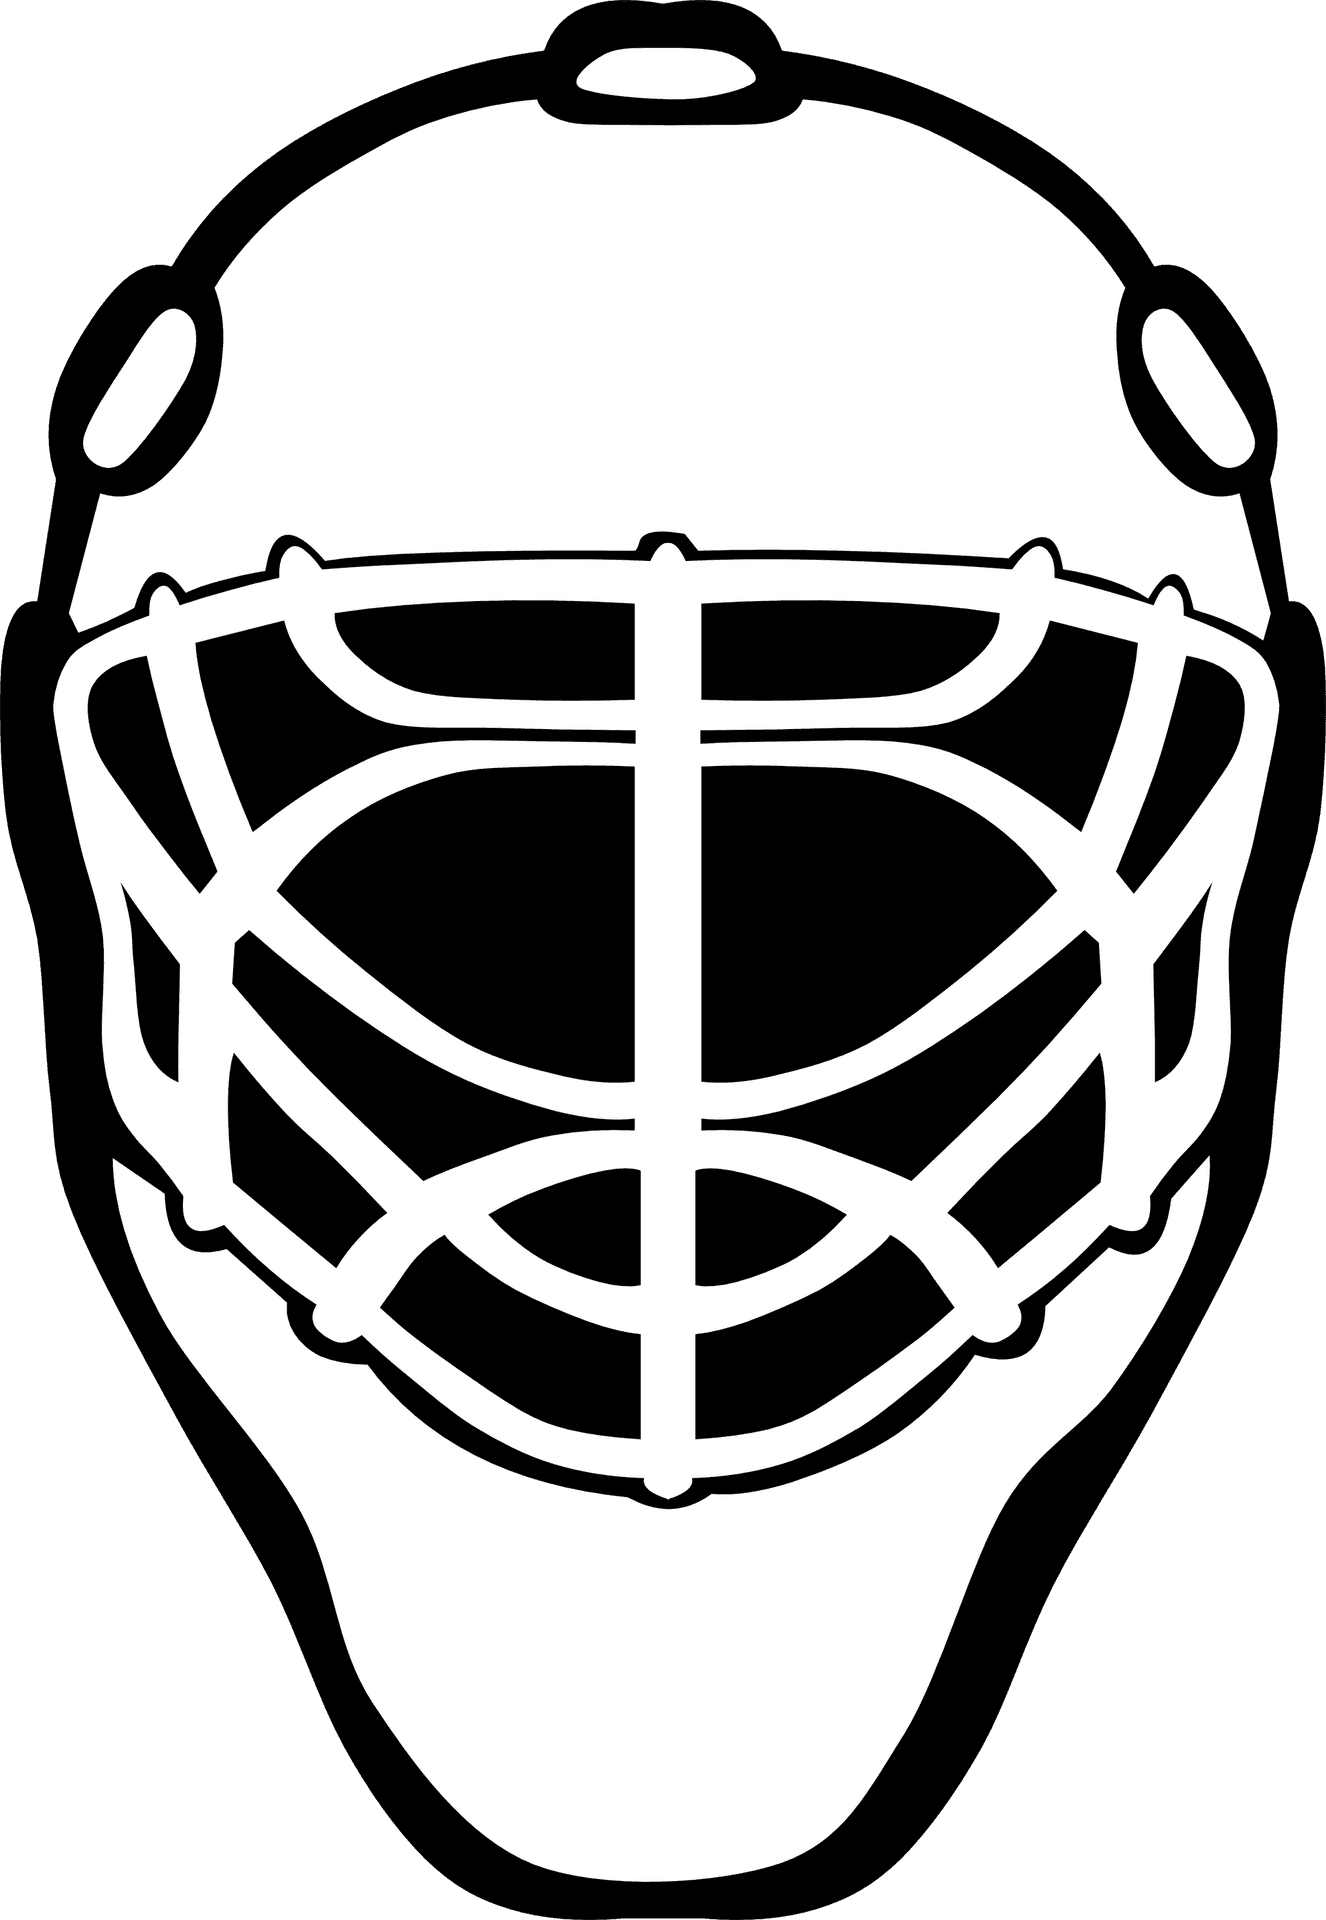 Hockey Goalie Mask Vector PNG